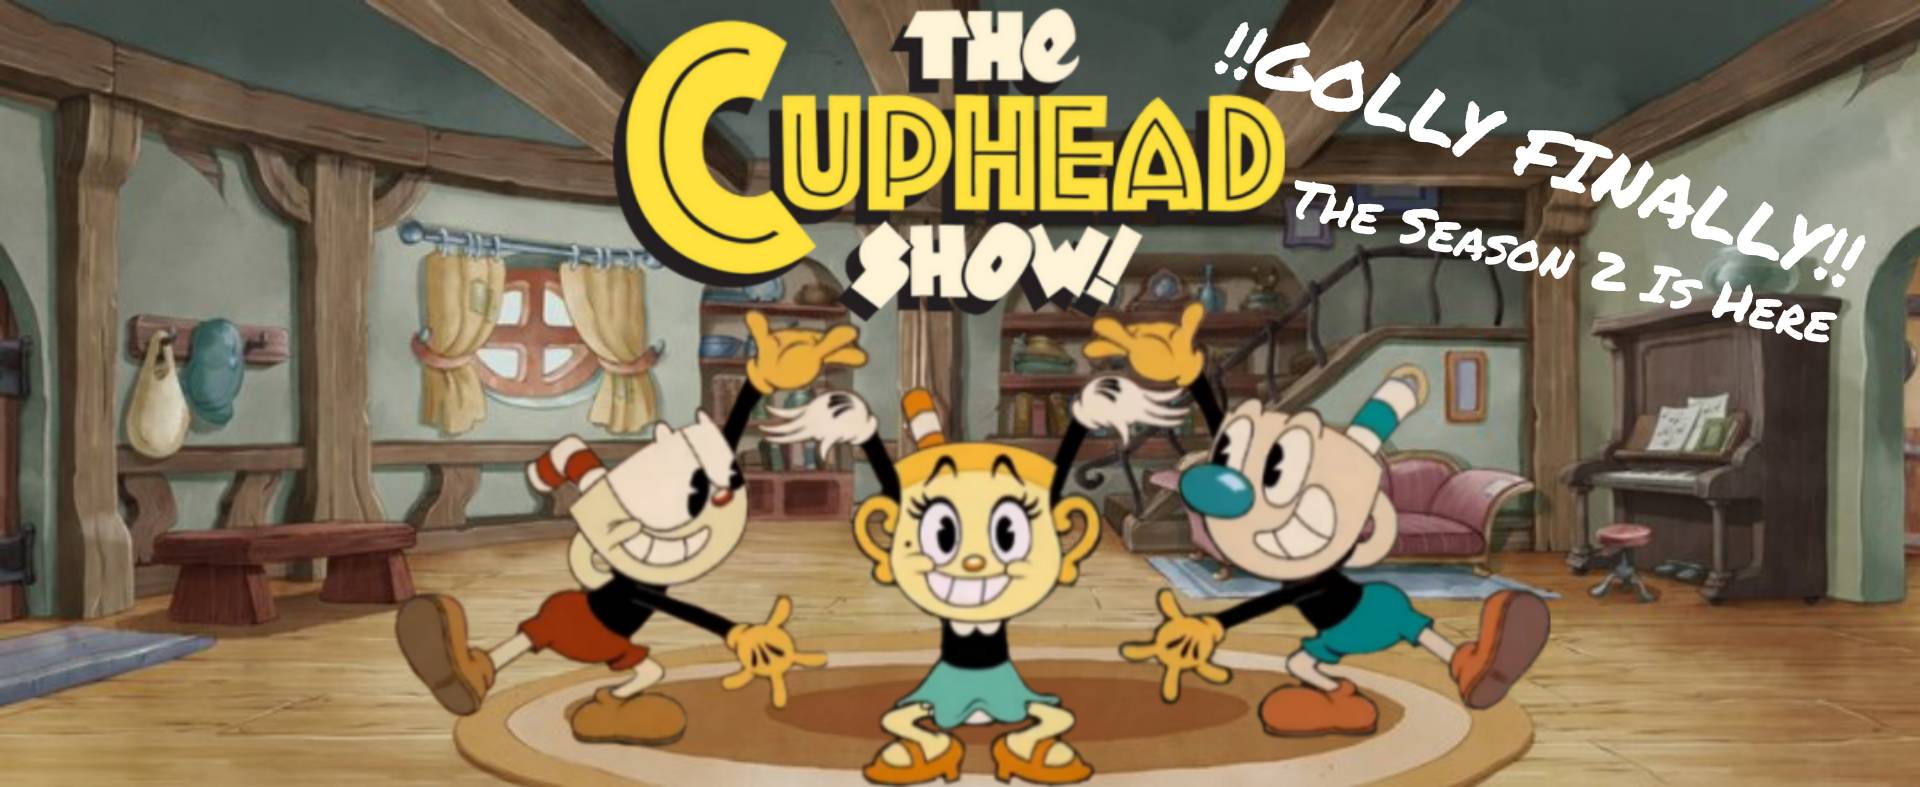 The Cuphead Show!: Season 2 - TV Guide